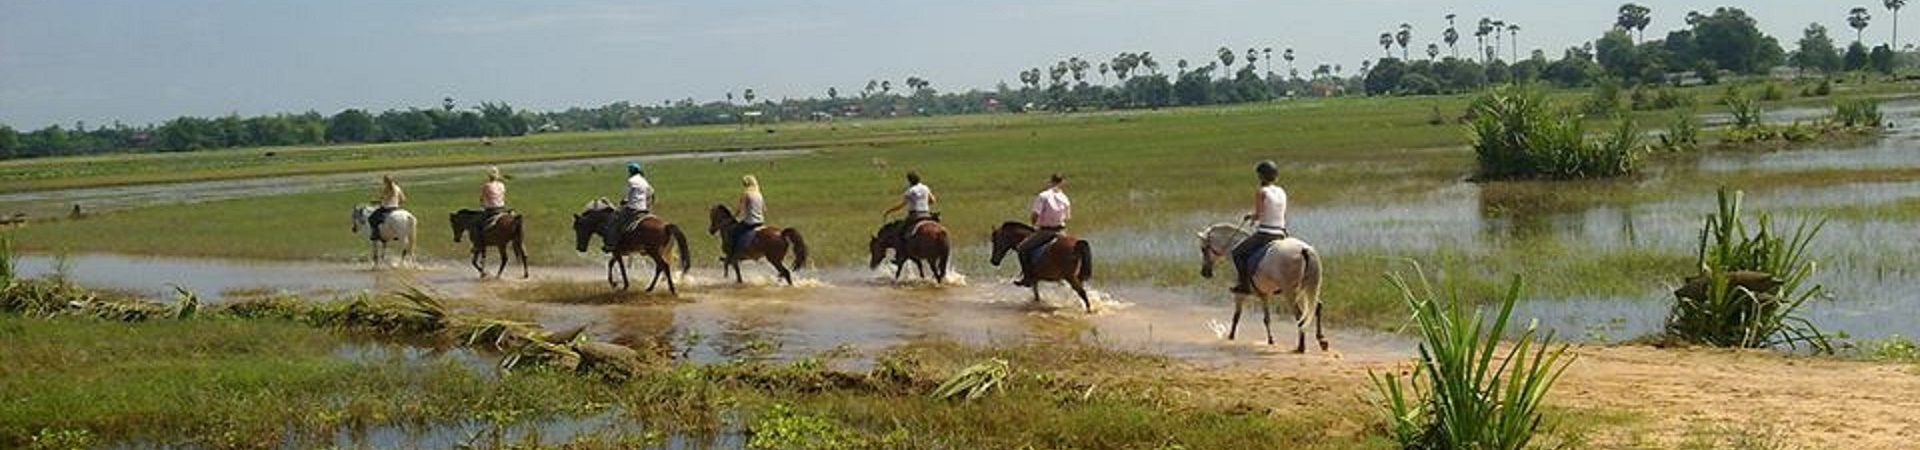 Image of Horseback Riding And Countryside